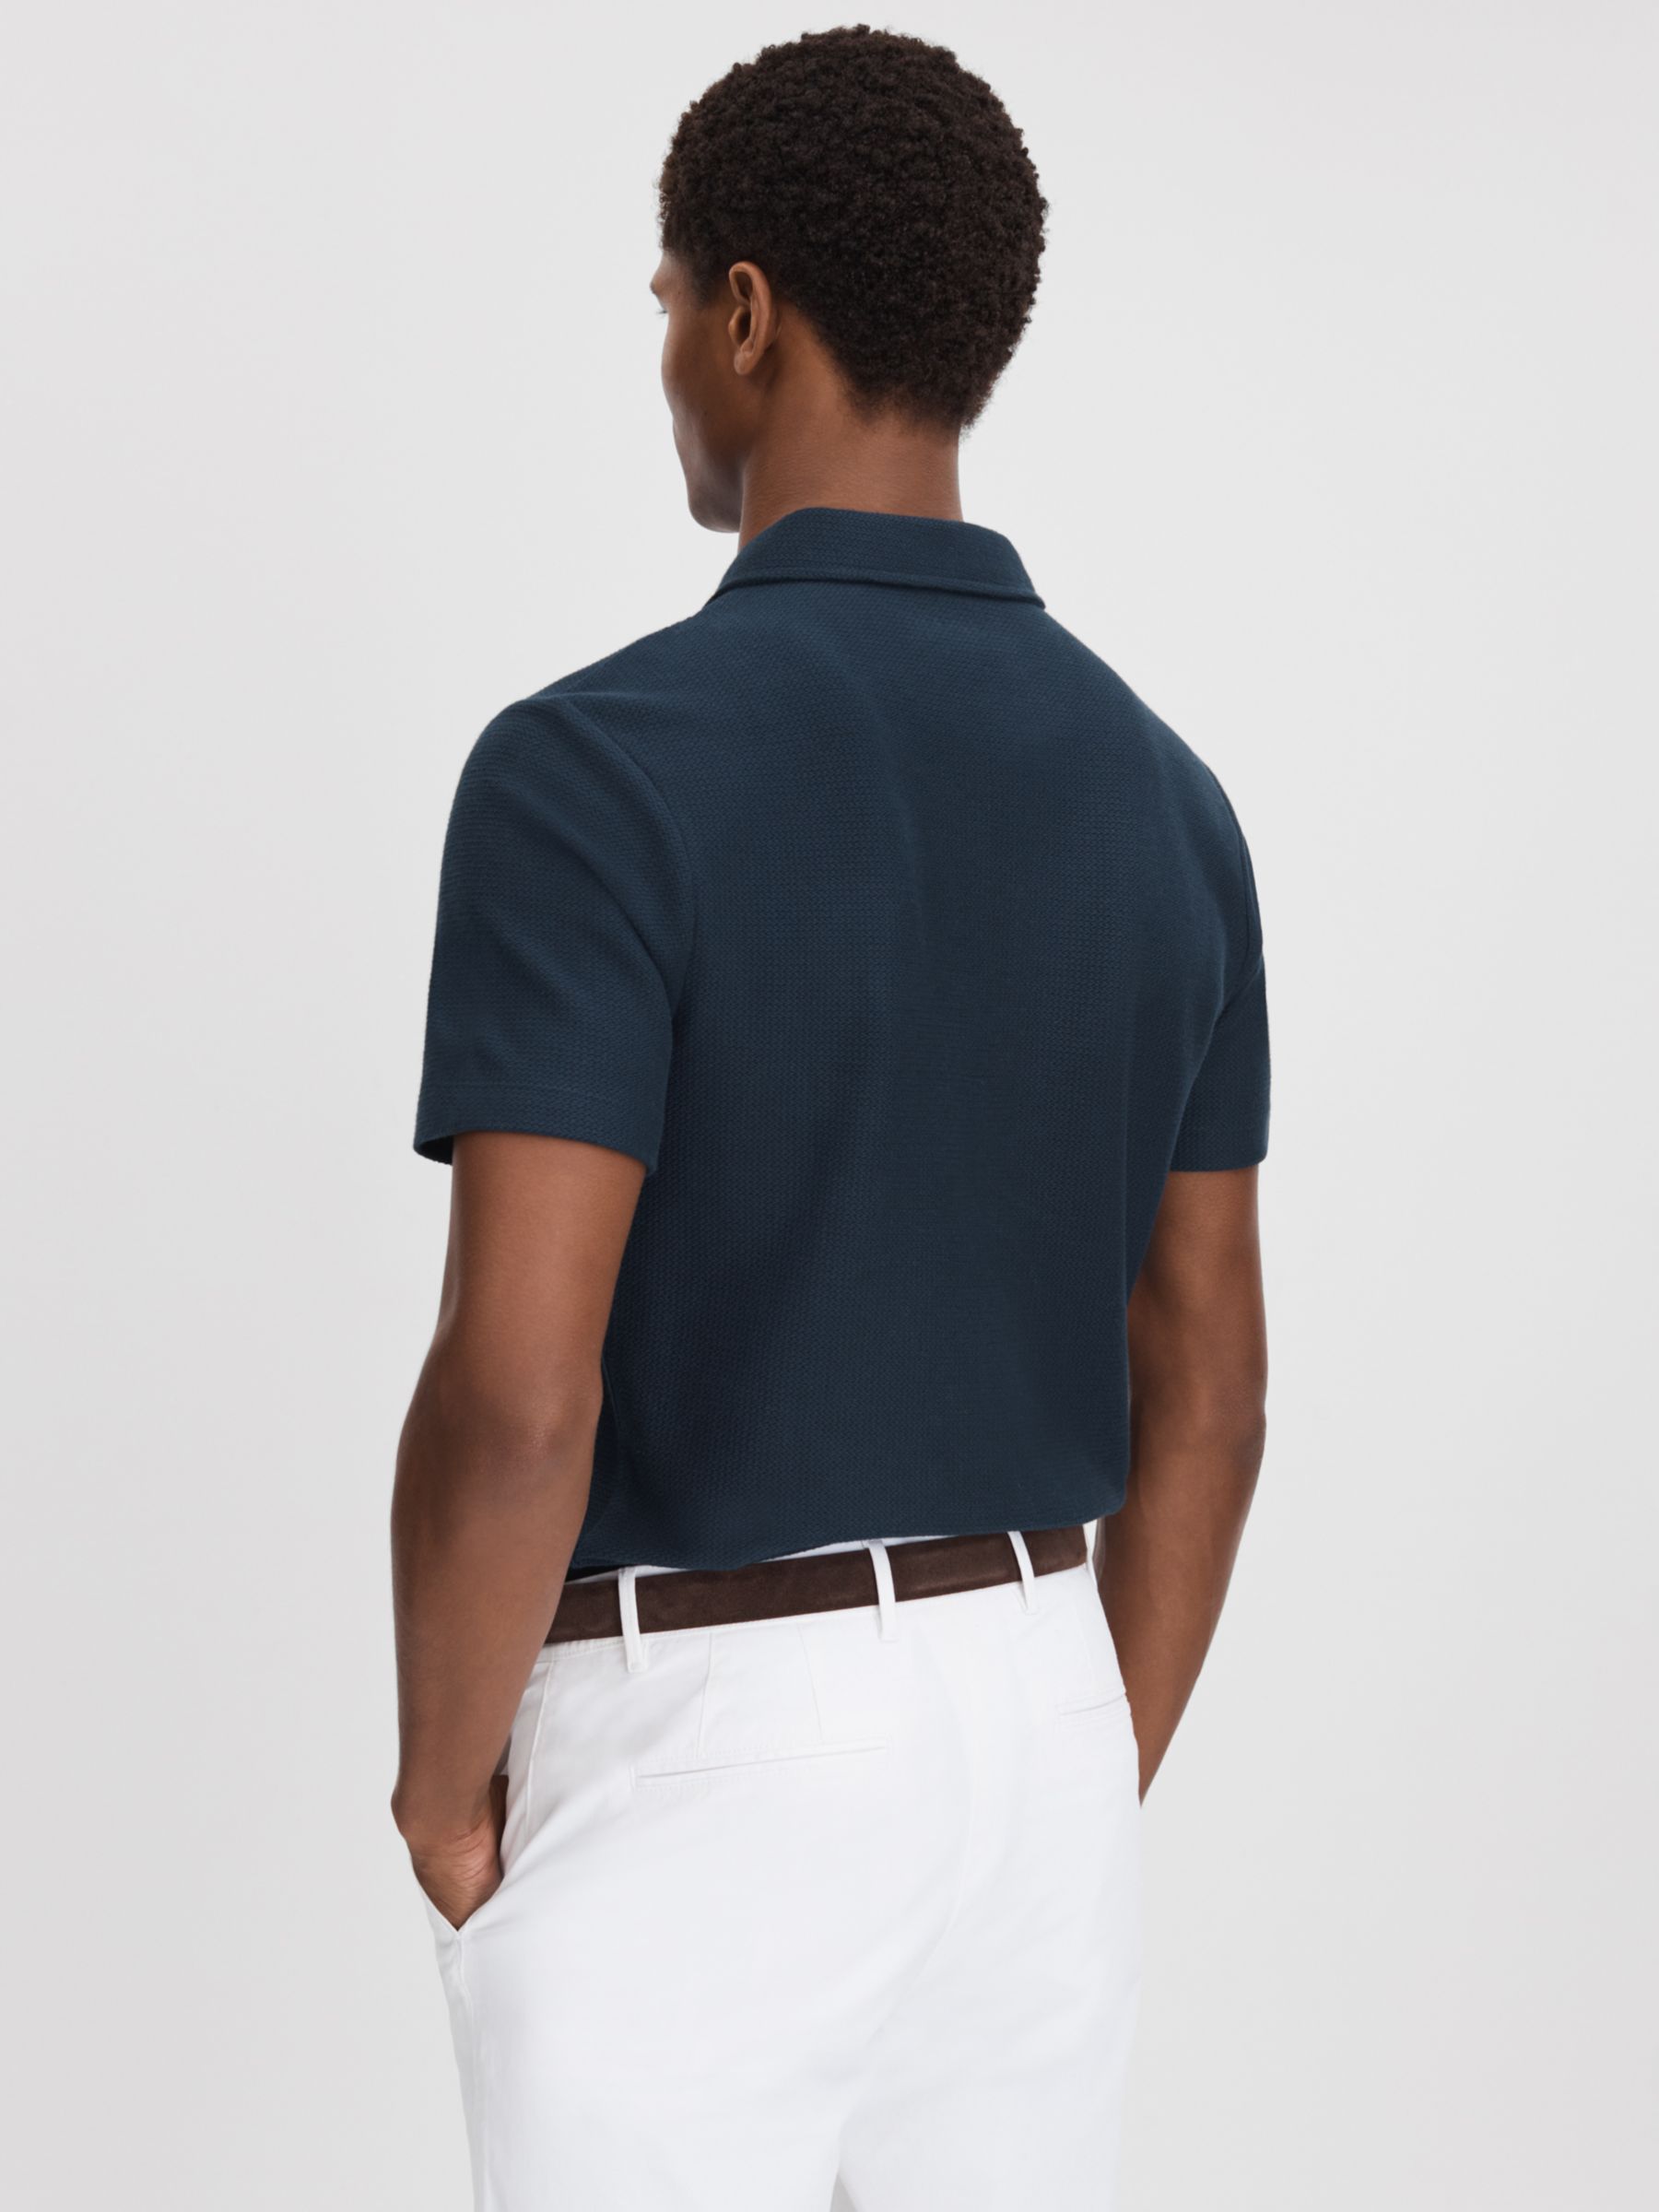 Reiss Felix Textured Half Zip Polo Shirt, Navy, XS